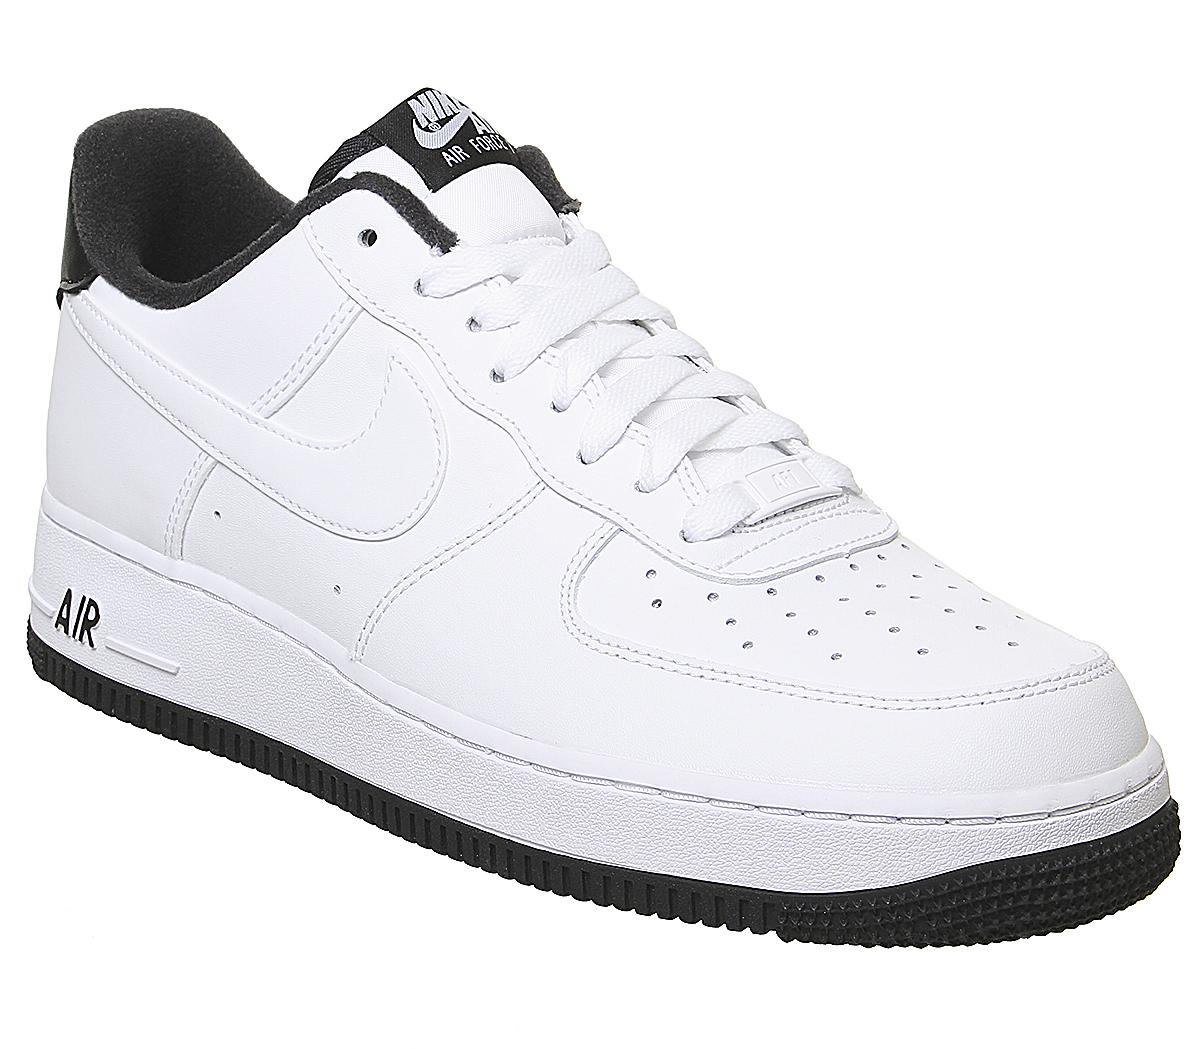 Nike Air Force 1 07 White Black White - Hers trainers